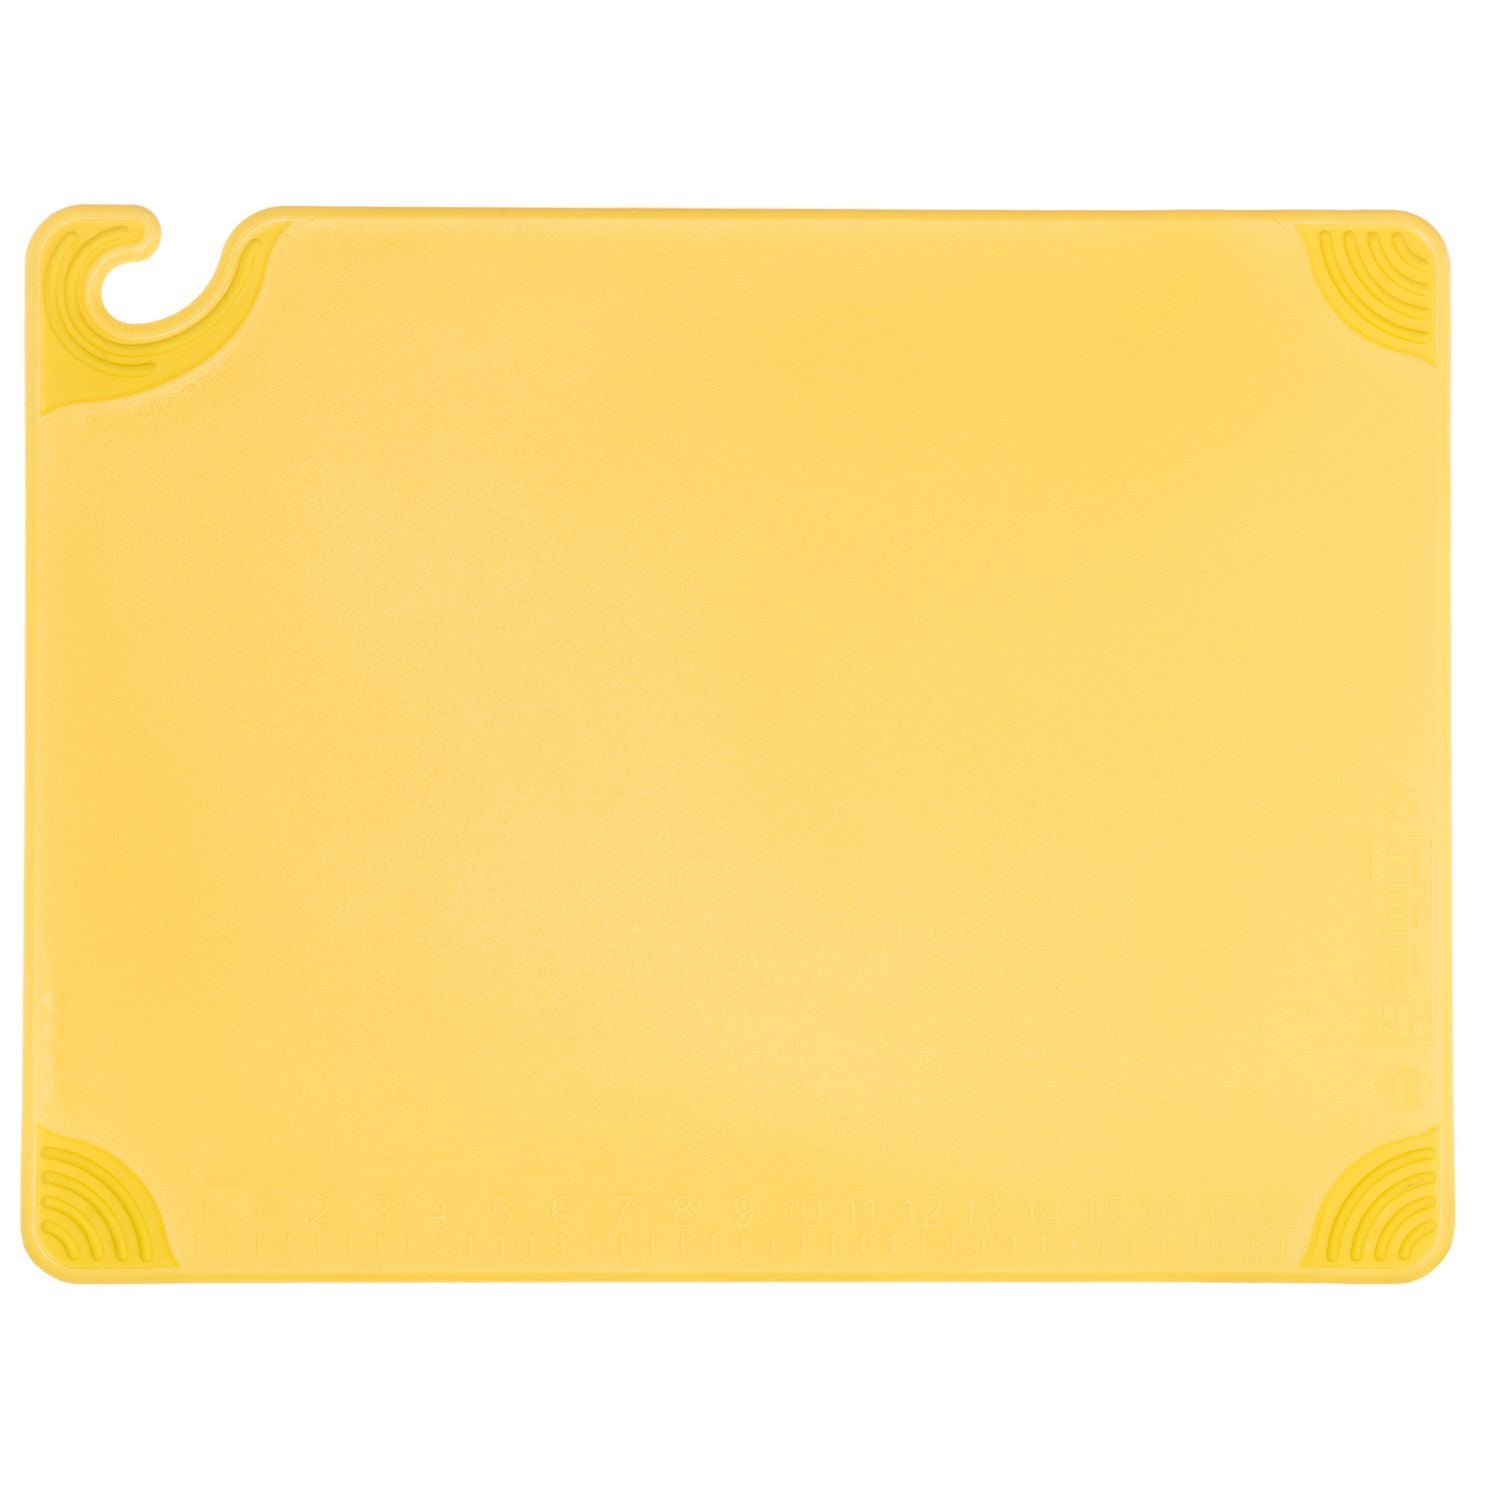 saf-t-grip-cutting-board-assorted-colors-24-x-18-x-05-6-pack_sjmcbg1824kc - 2